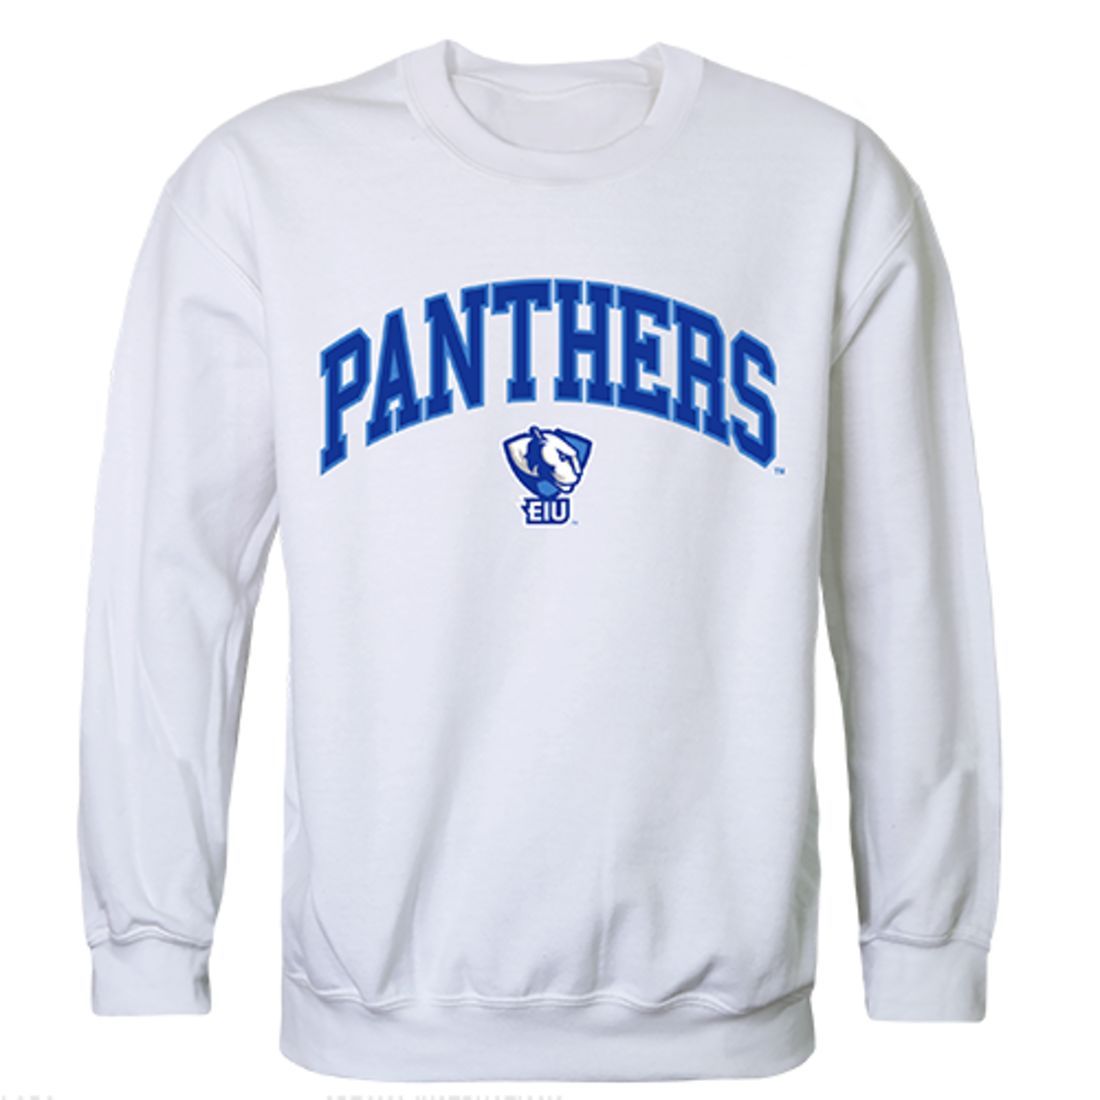 EIU Eastern Illinois University Campus Crewneck Pullover Sweatshirt Sweater White-Campus-Wardrobe